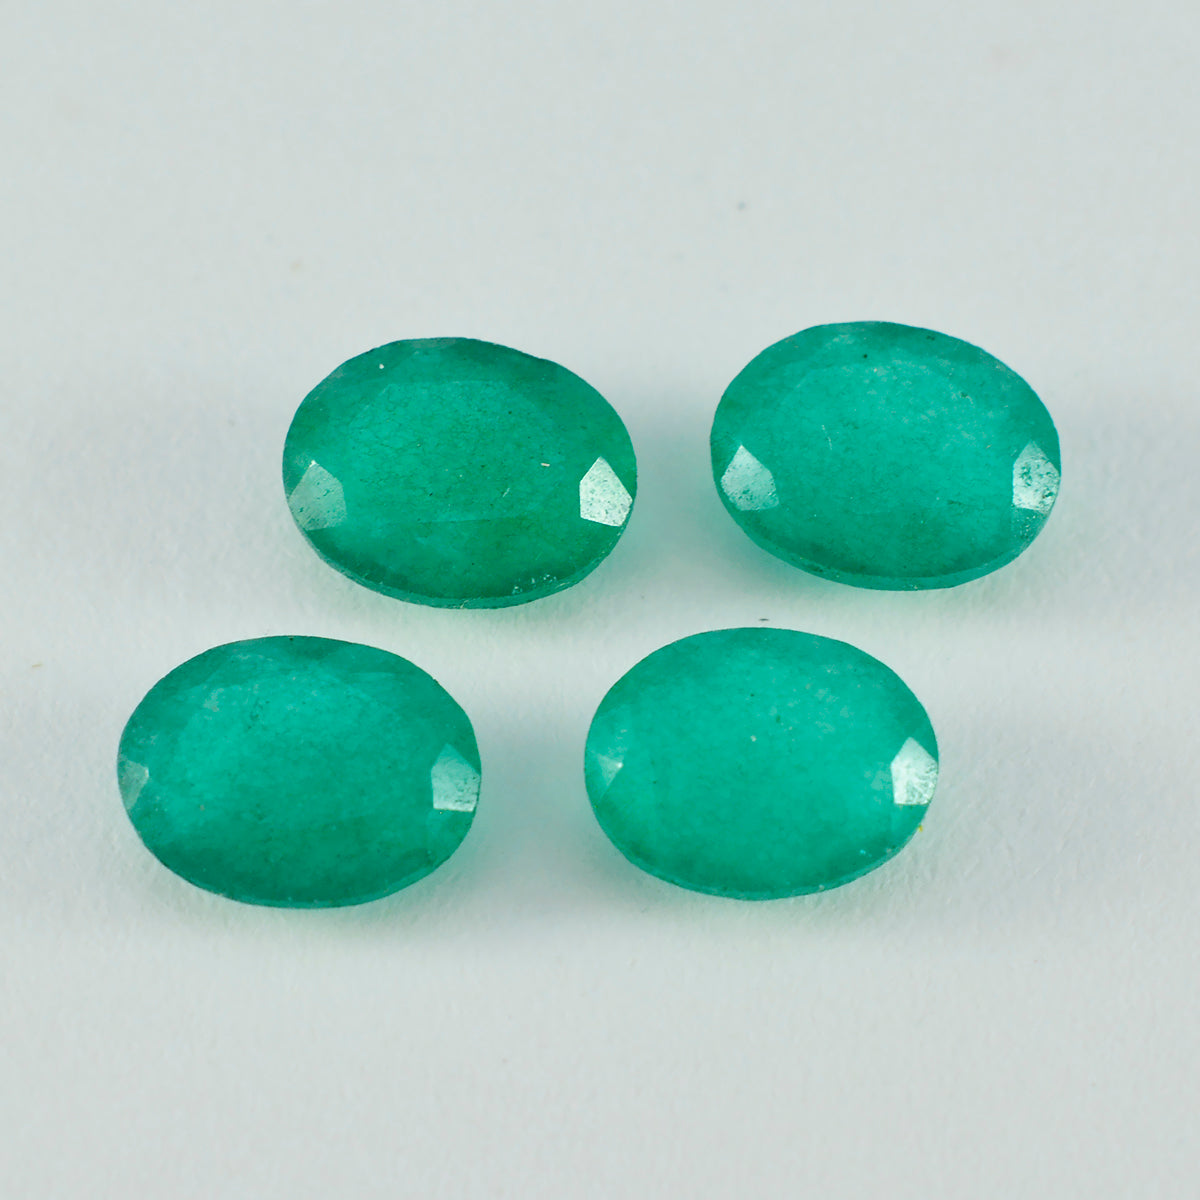 riyogems 1 шт. натуральная зеленая яшма ограненная 10х14 мм овальная форма превосходное качество россыпь драгоценных камней